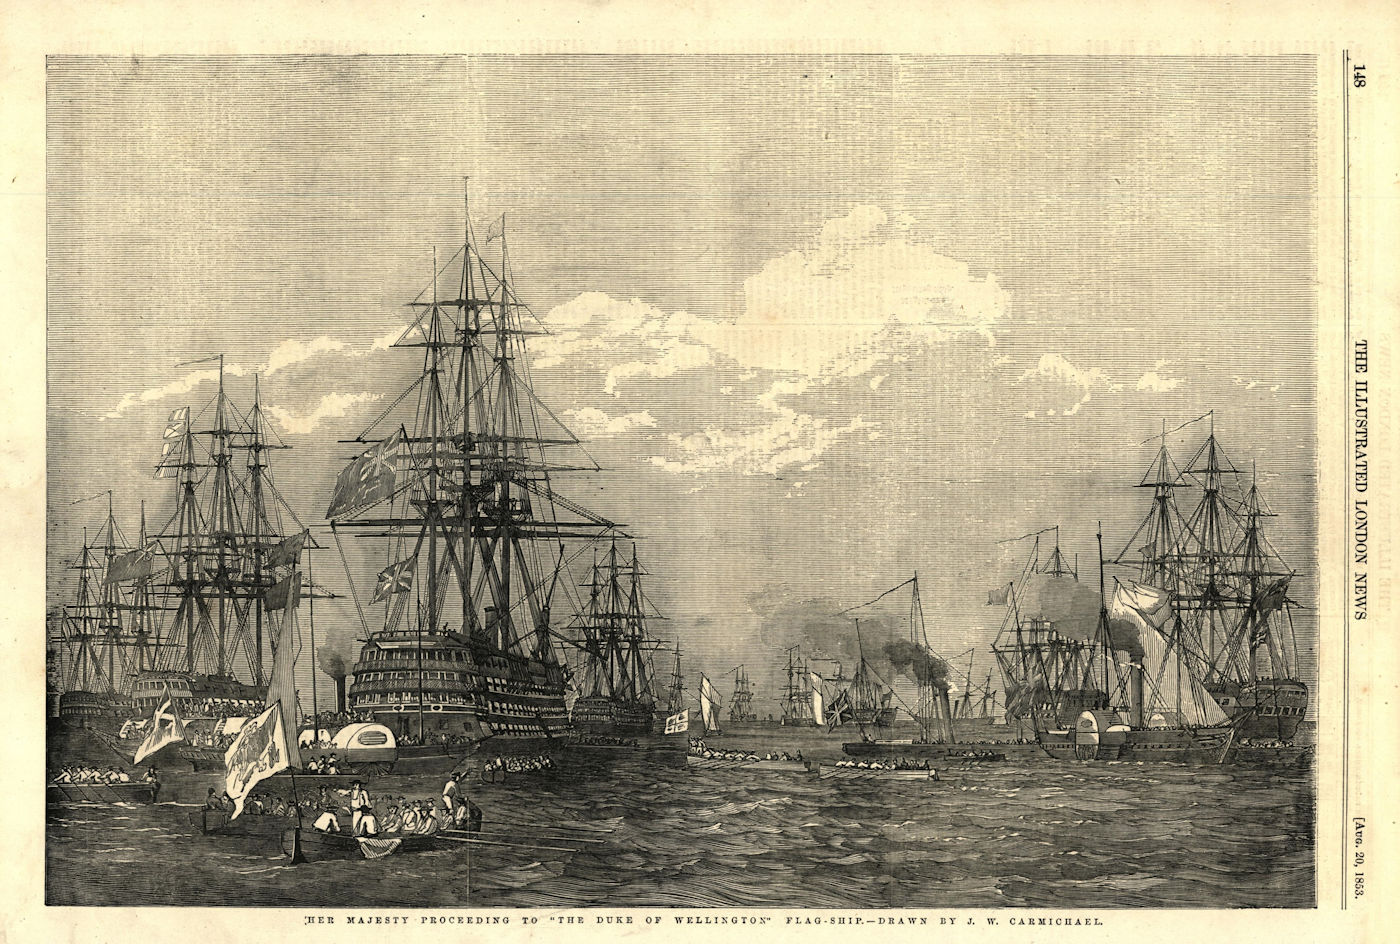 Her Majesty proceeding to "The Duke of Wellington" flagship. Royal Navy 1853